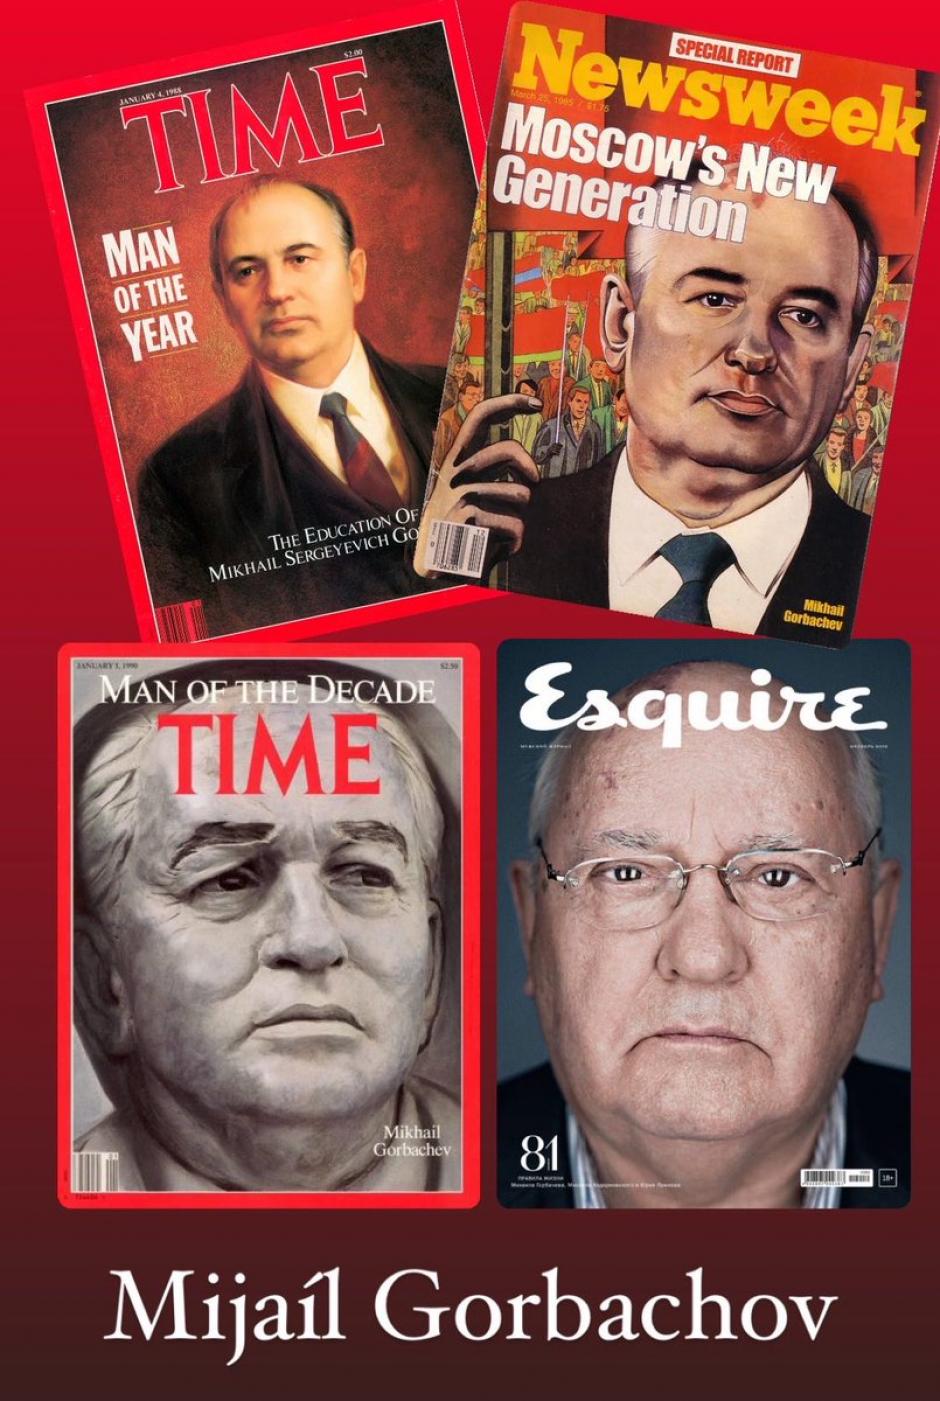 Varias portadas de medios occidentales ensalzan la figura de Gorbachov